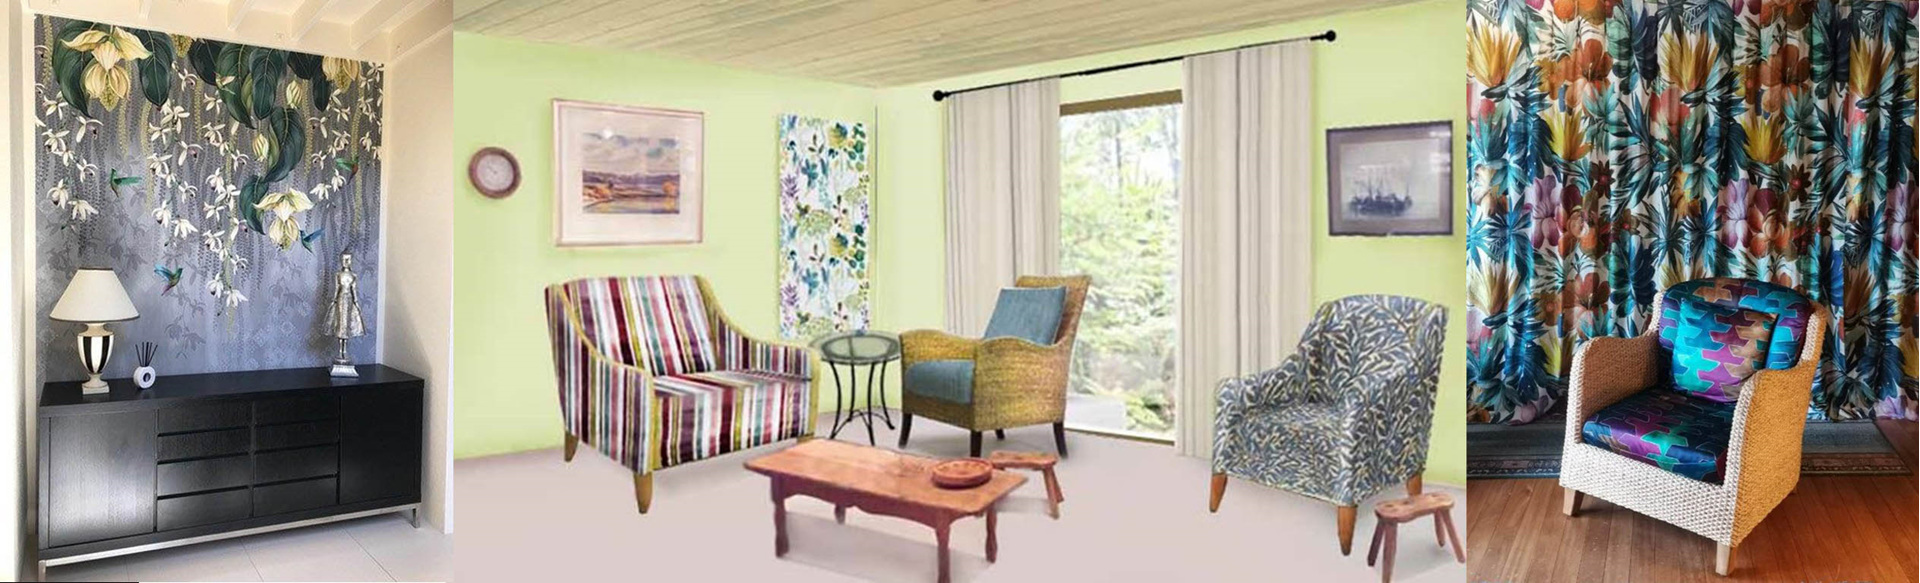 interior design decorating new zealand NZ bloomdesigns bespoke